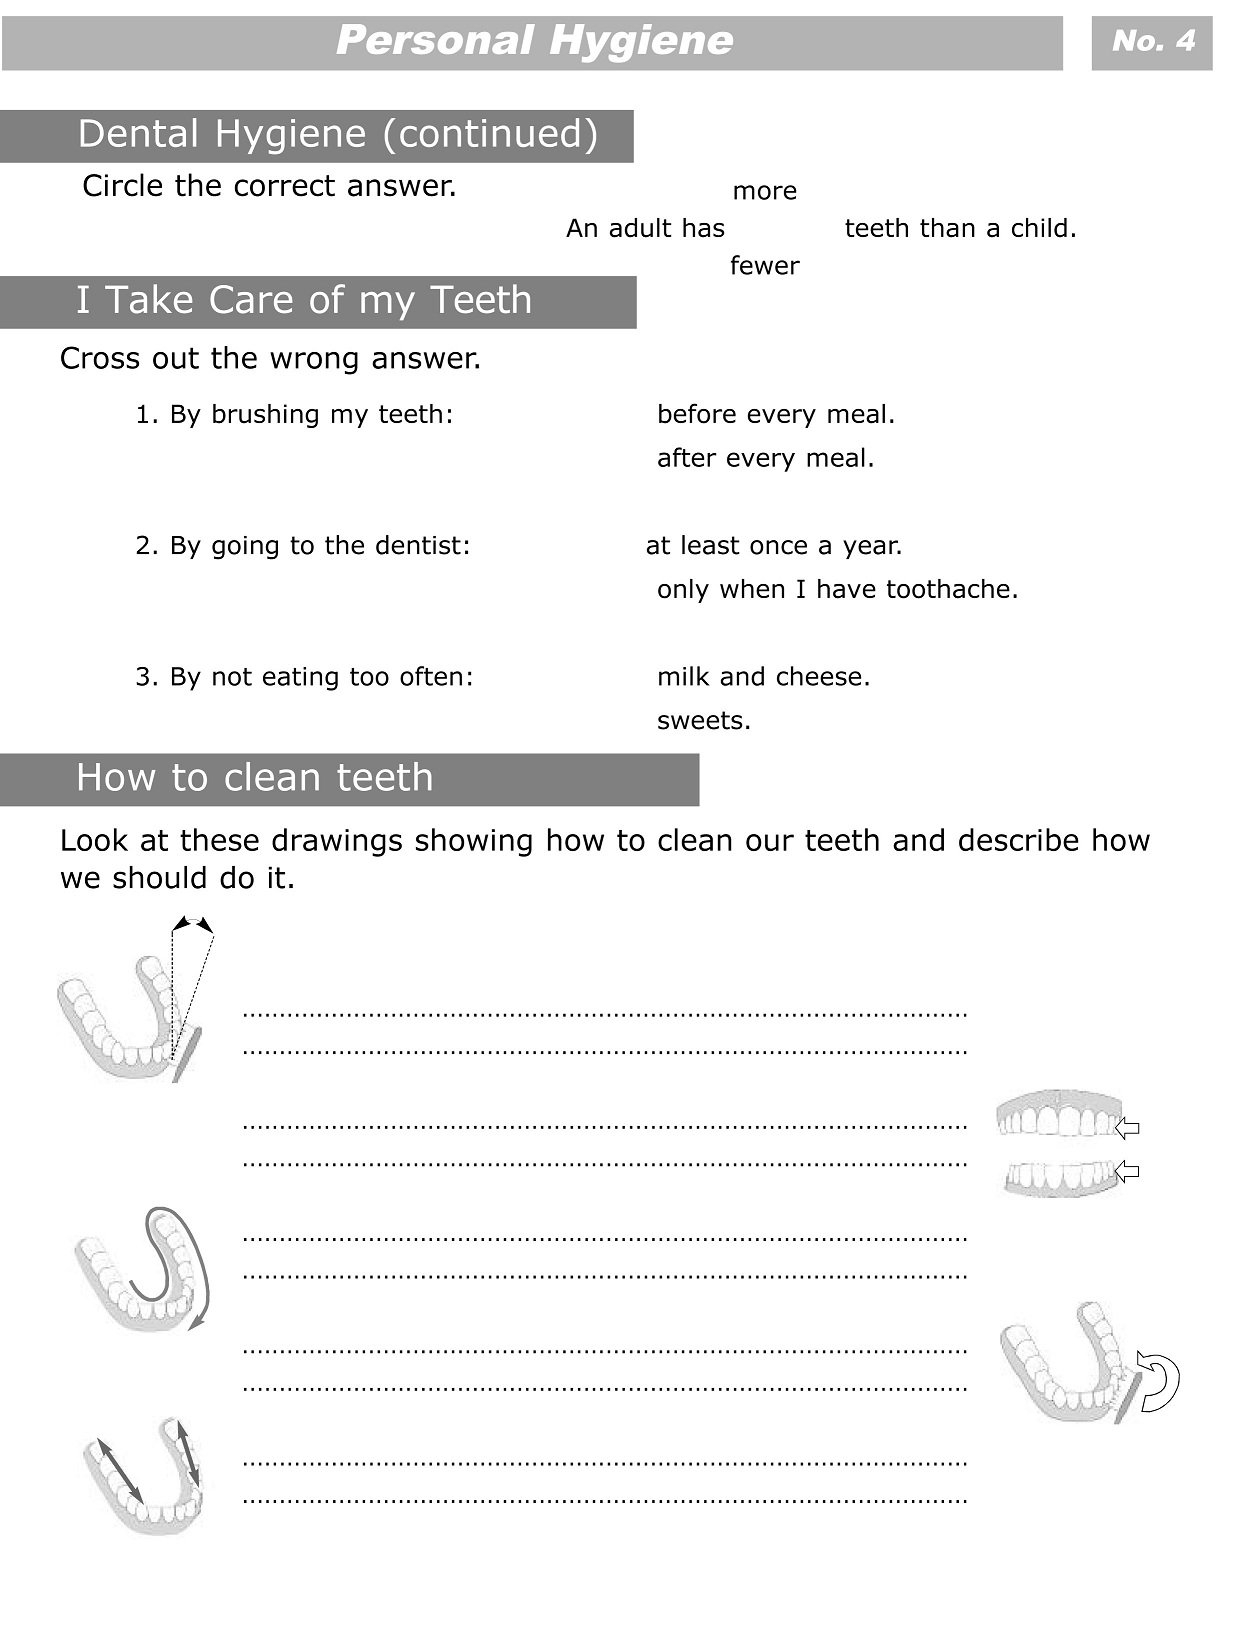 Personal Hygiene Worksheets For Kids Level 2  Personal Hygiene Together With Personal Hygiene Worksheets Pdf